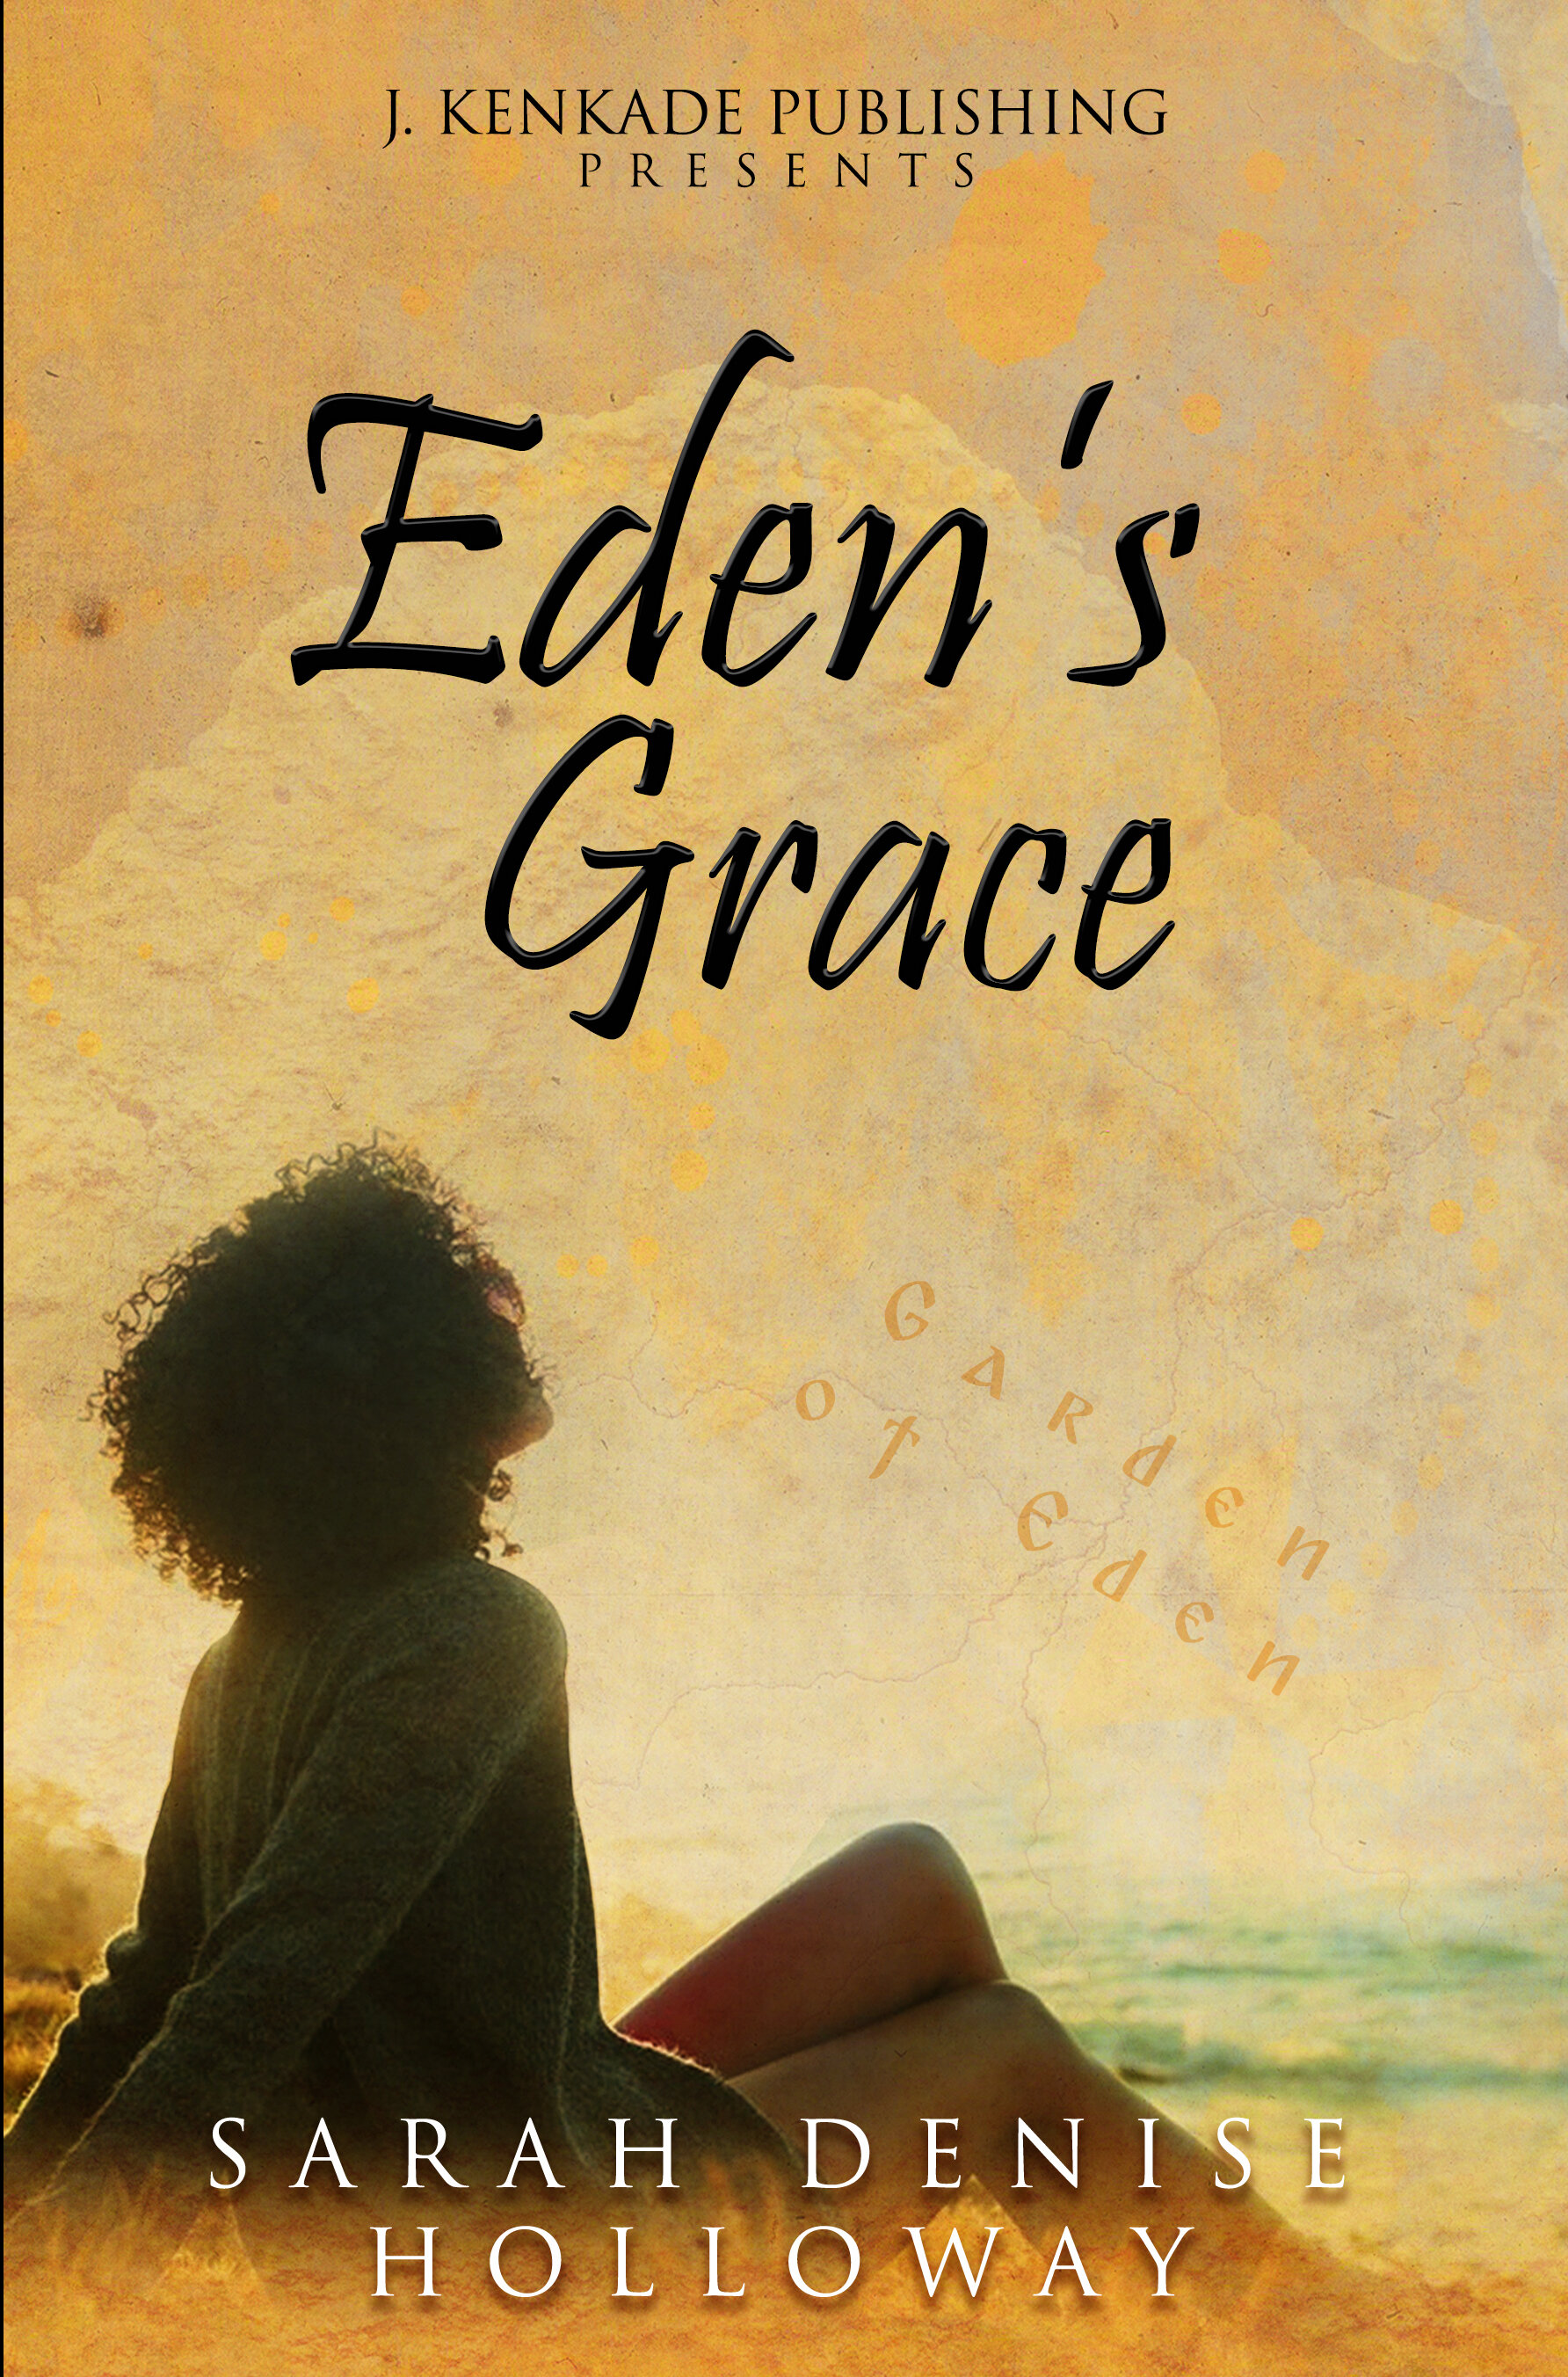 Kindle-Eden's Grace.jpg